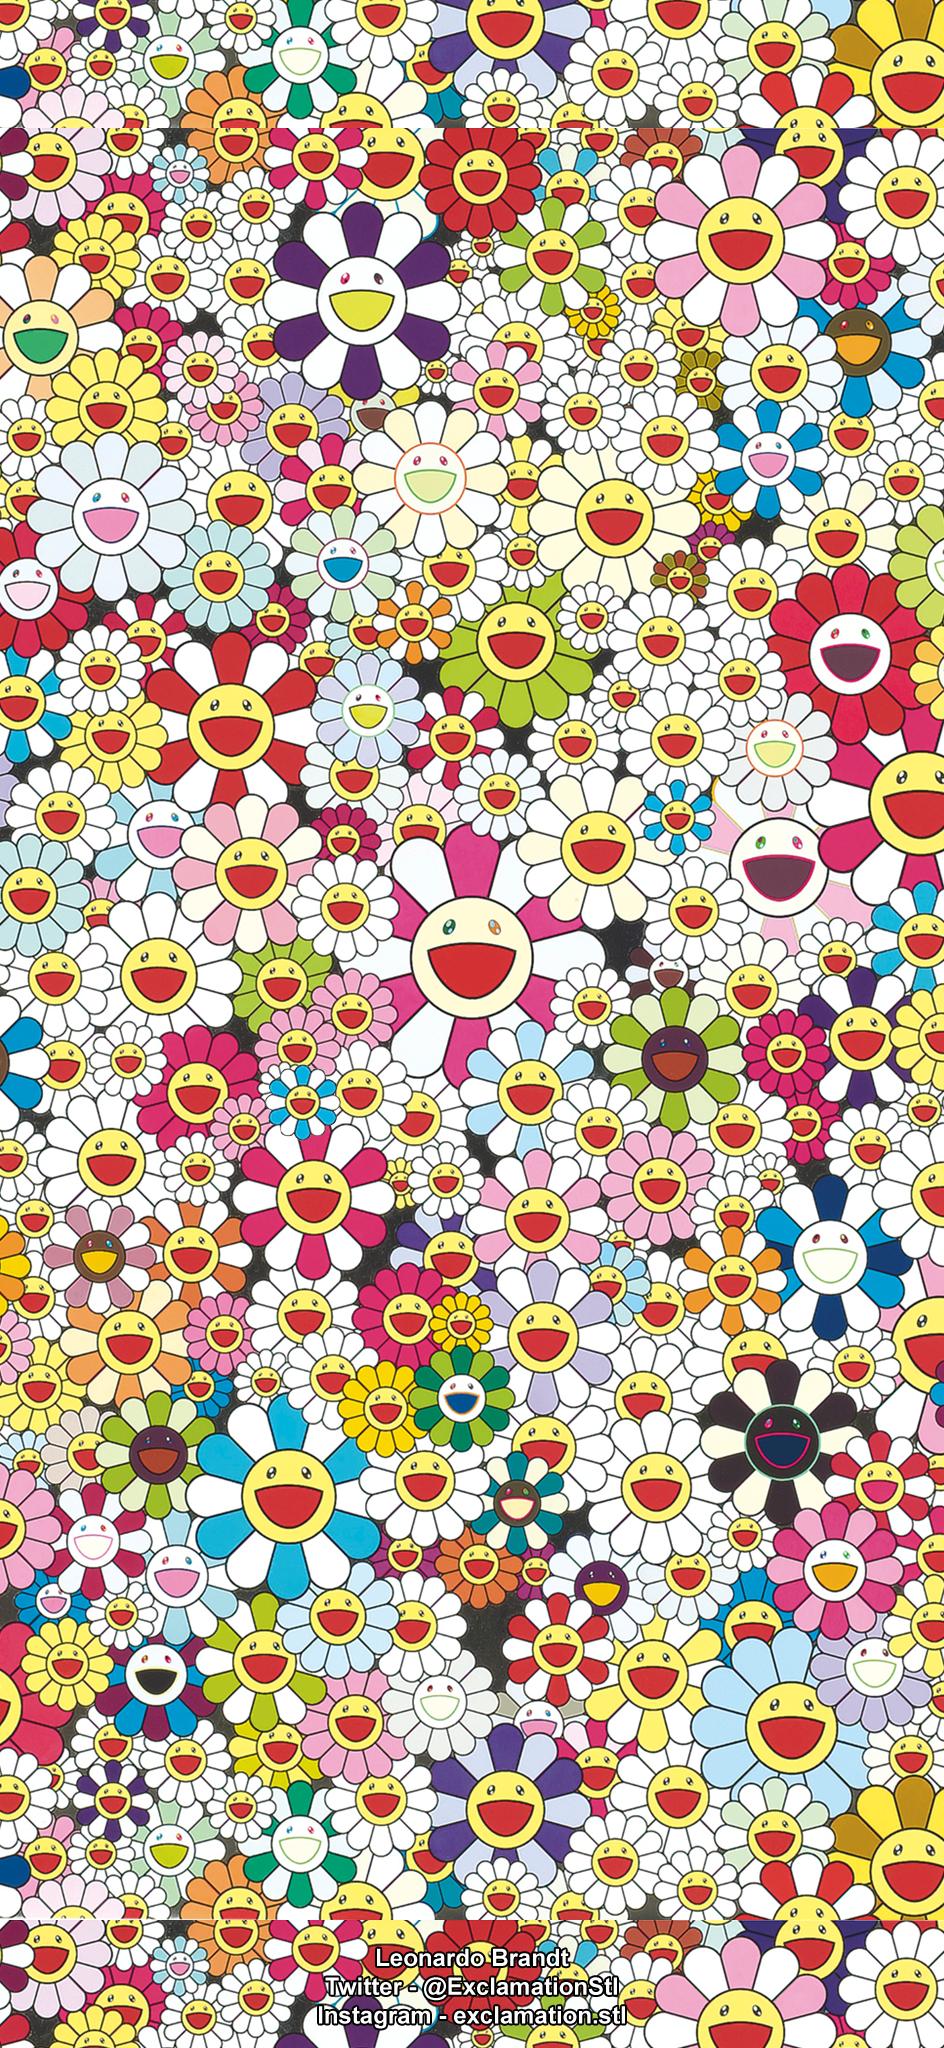 Takashi Murakami Wallpaper Works Best With iPhone Ios14